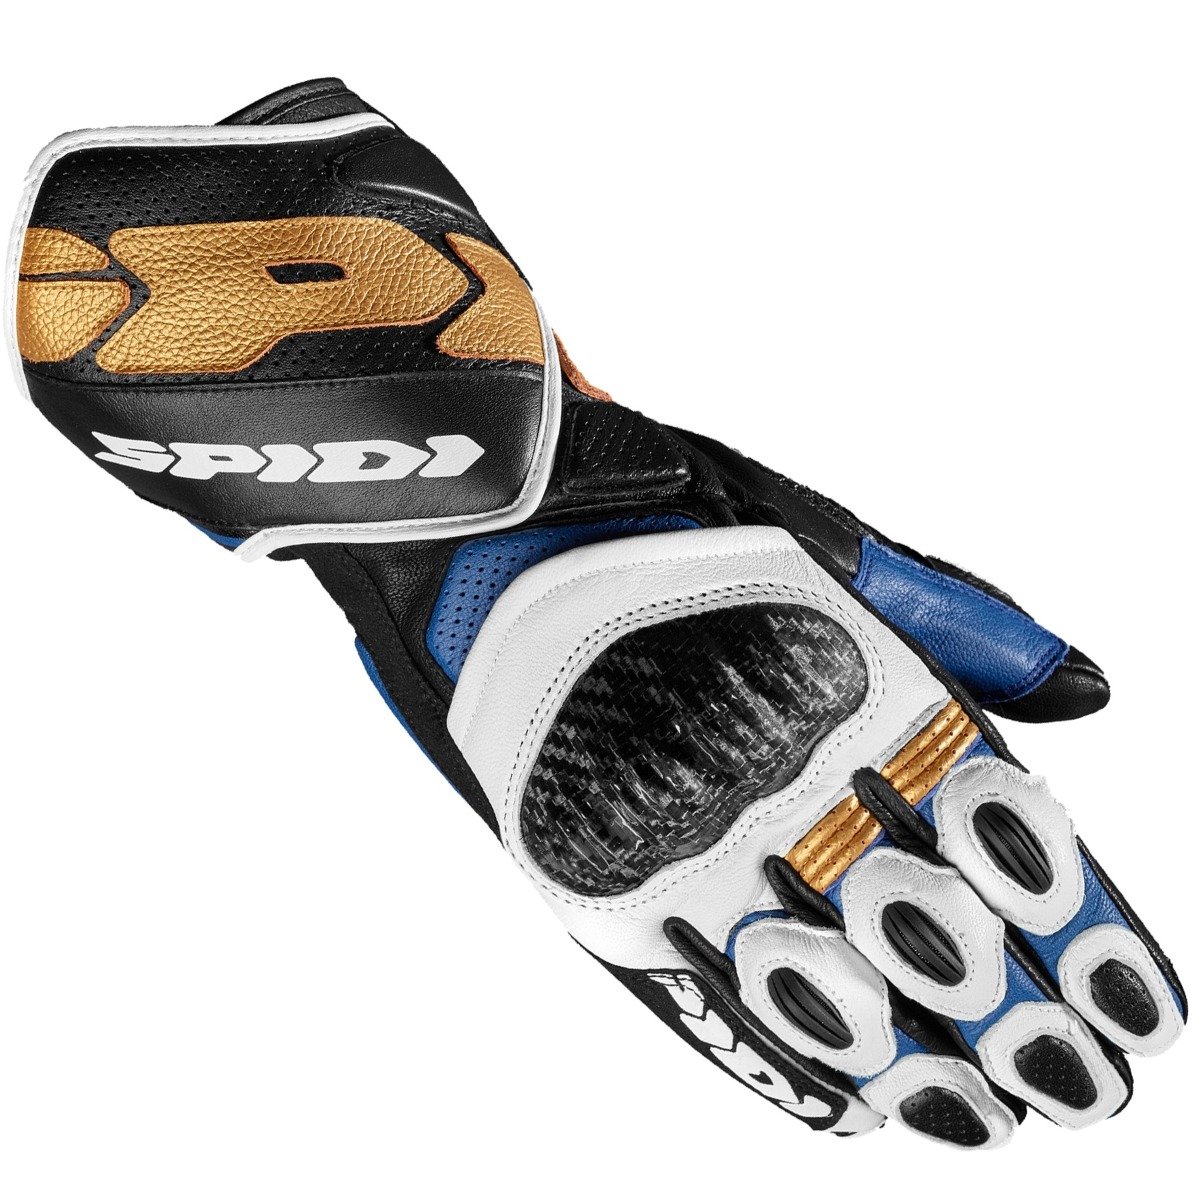 Image of Spidi Carbo 7 Blau Gold Handschuhe Größe 2XL